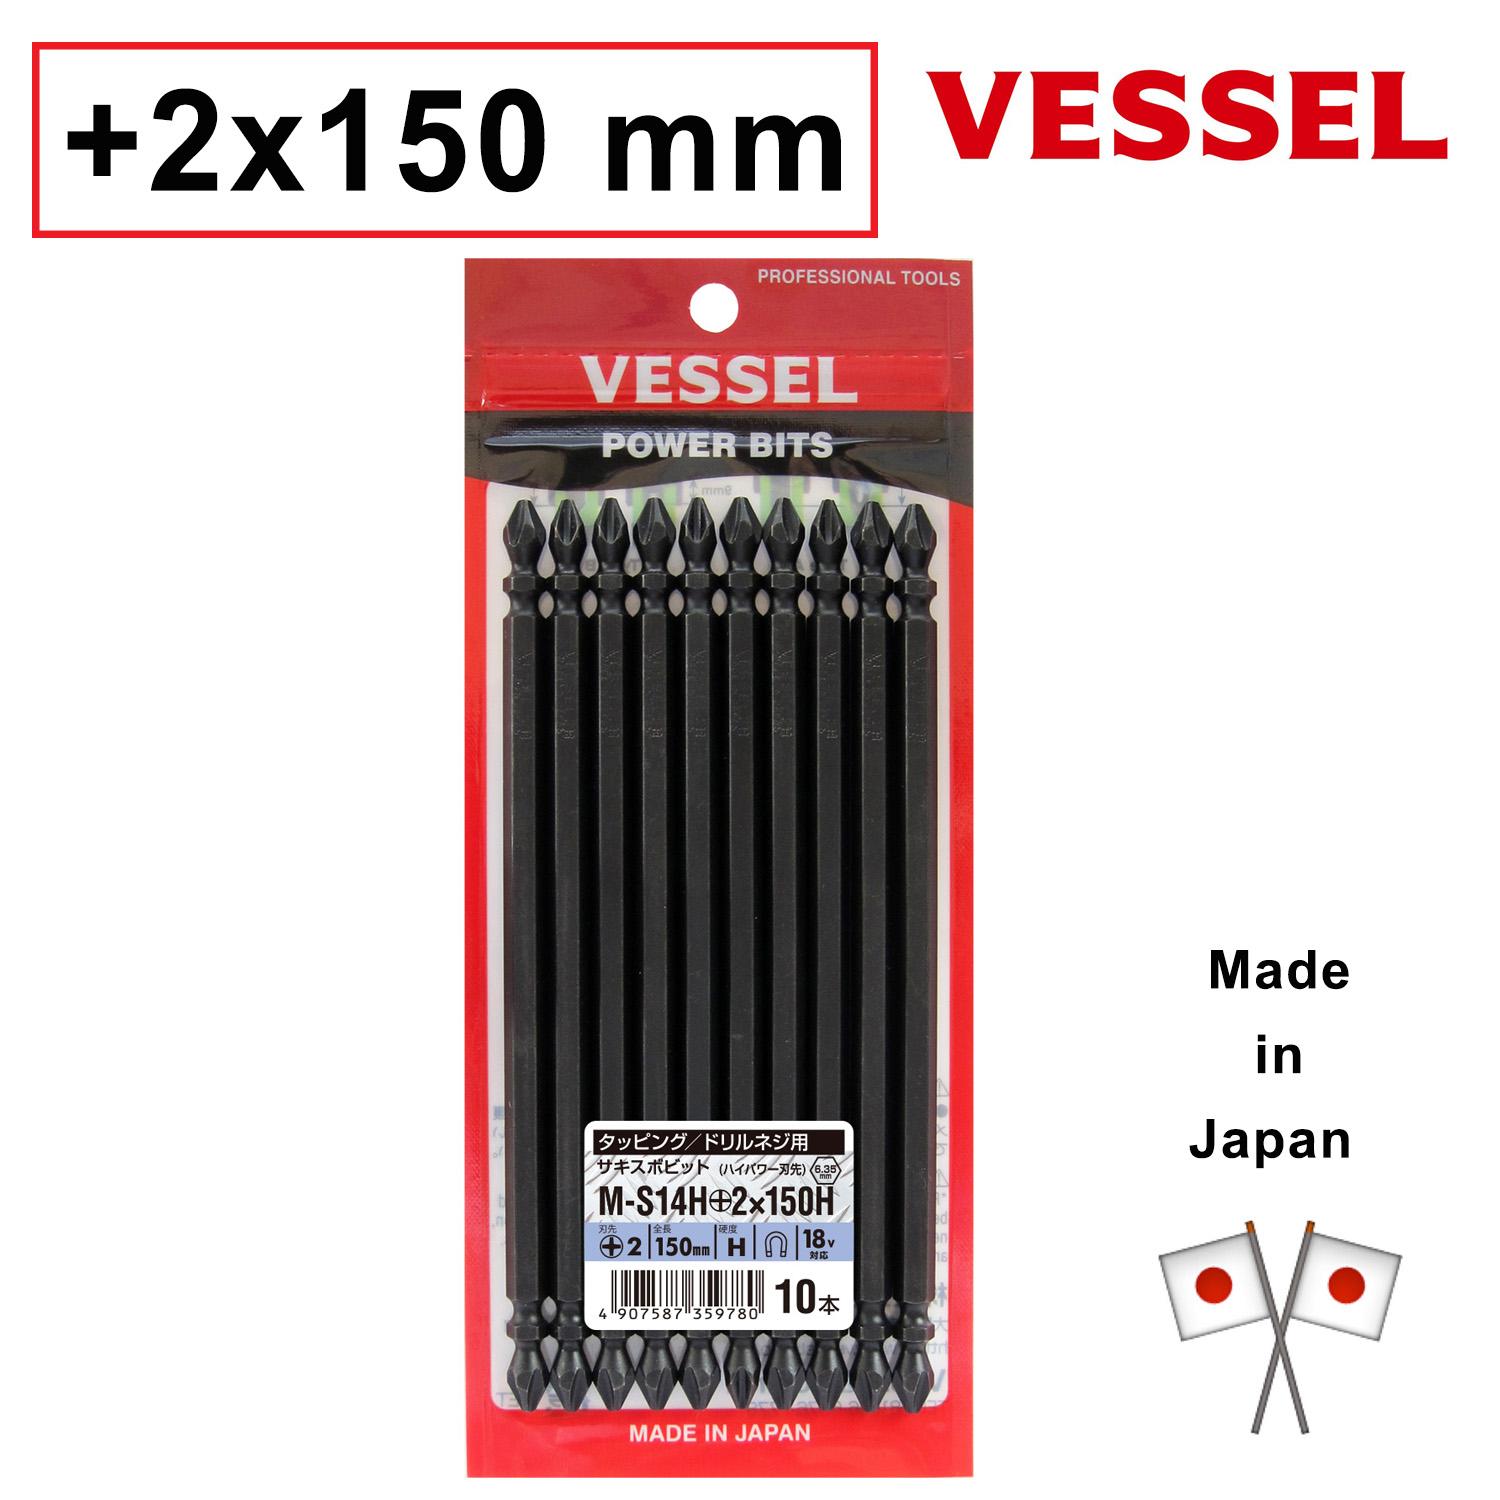 Vessel ดอกไขควงลม 2 หัว (10 ดอก) ปลายแม่เหล็ก No.M-S14H สี แฉก +2 x 150 (VE-415448)